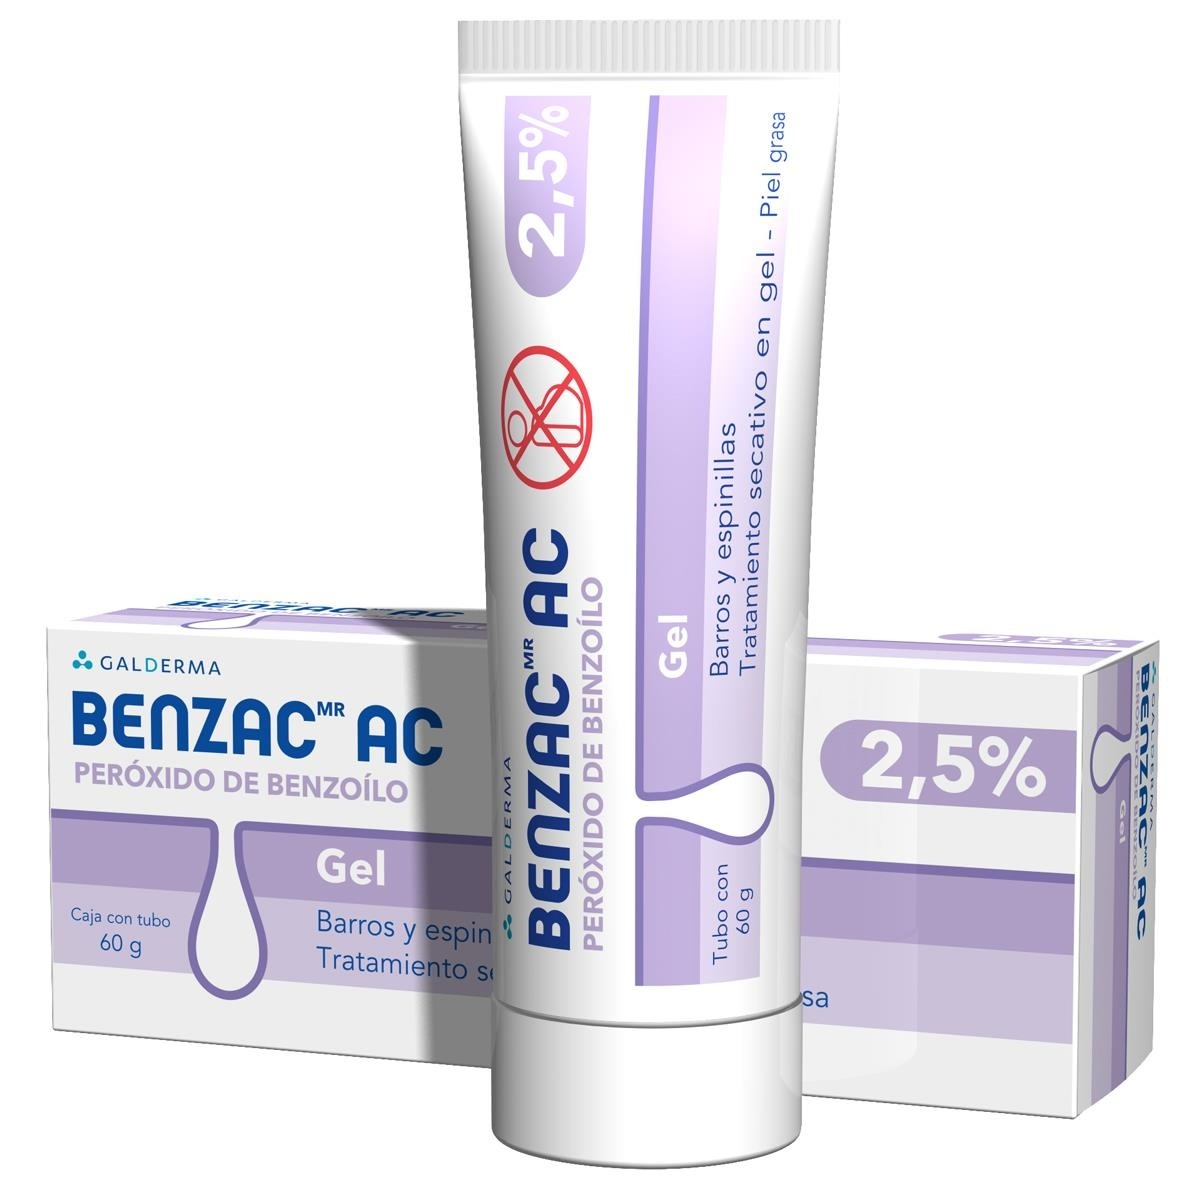 Benzac Ac 2.5% (GALDERMA)